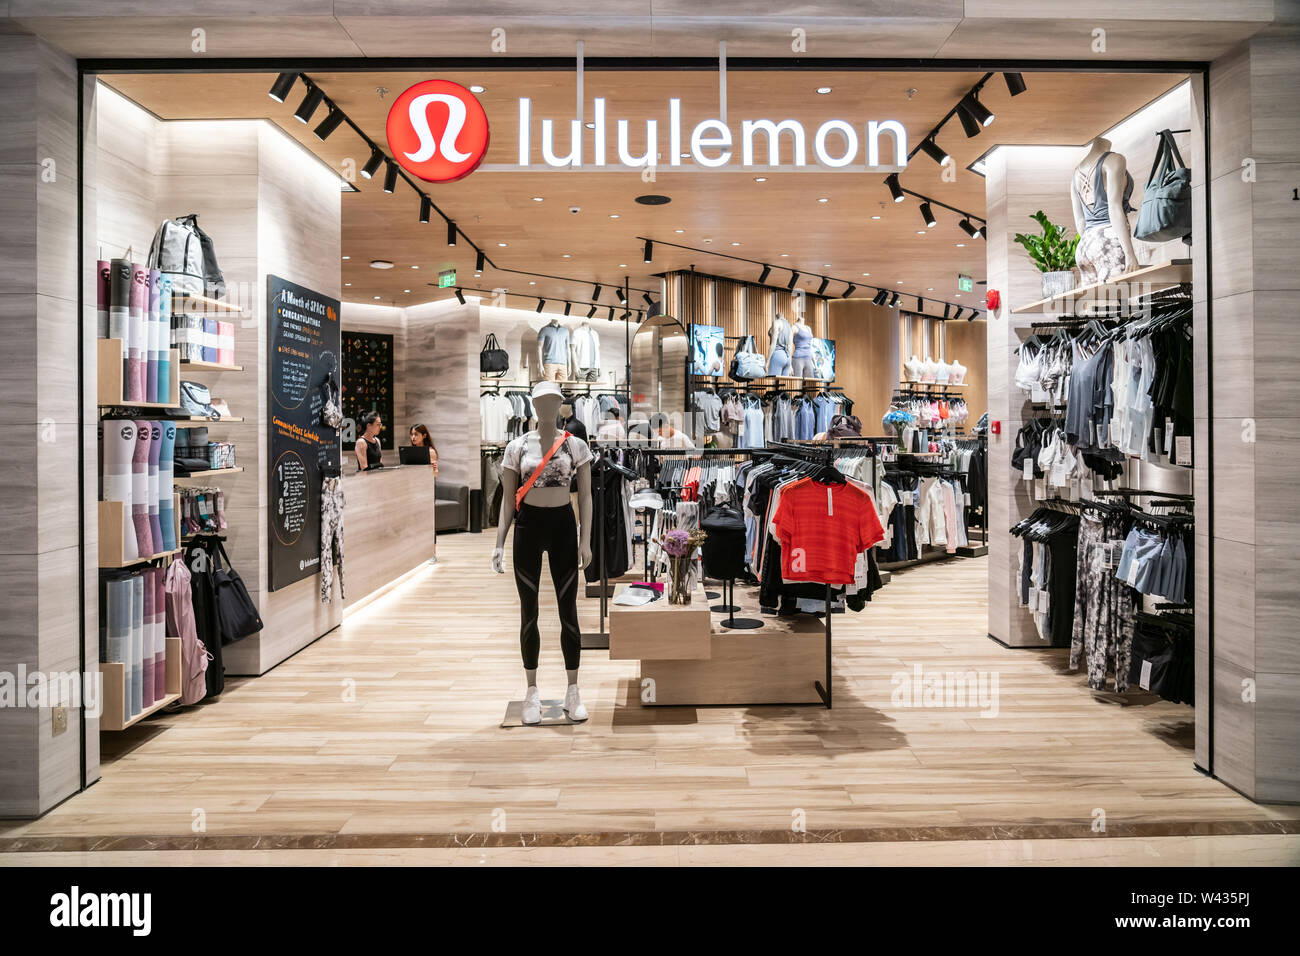 lululemon stores